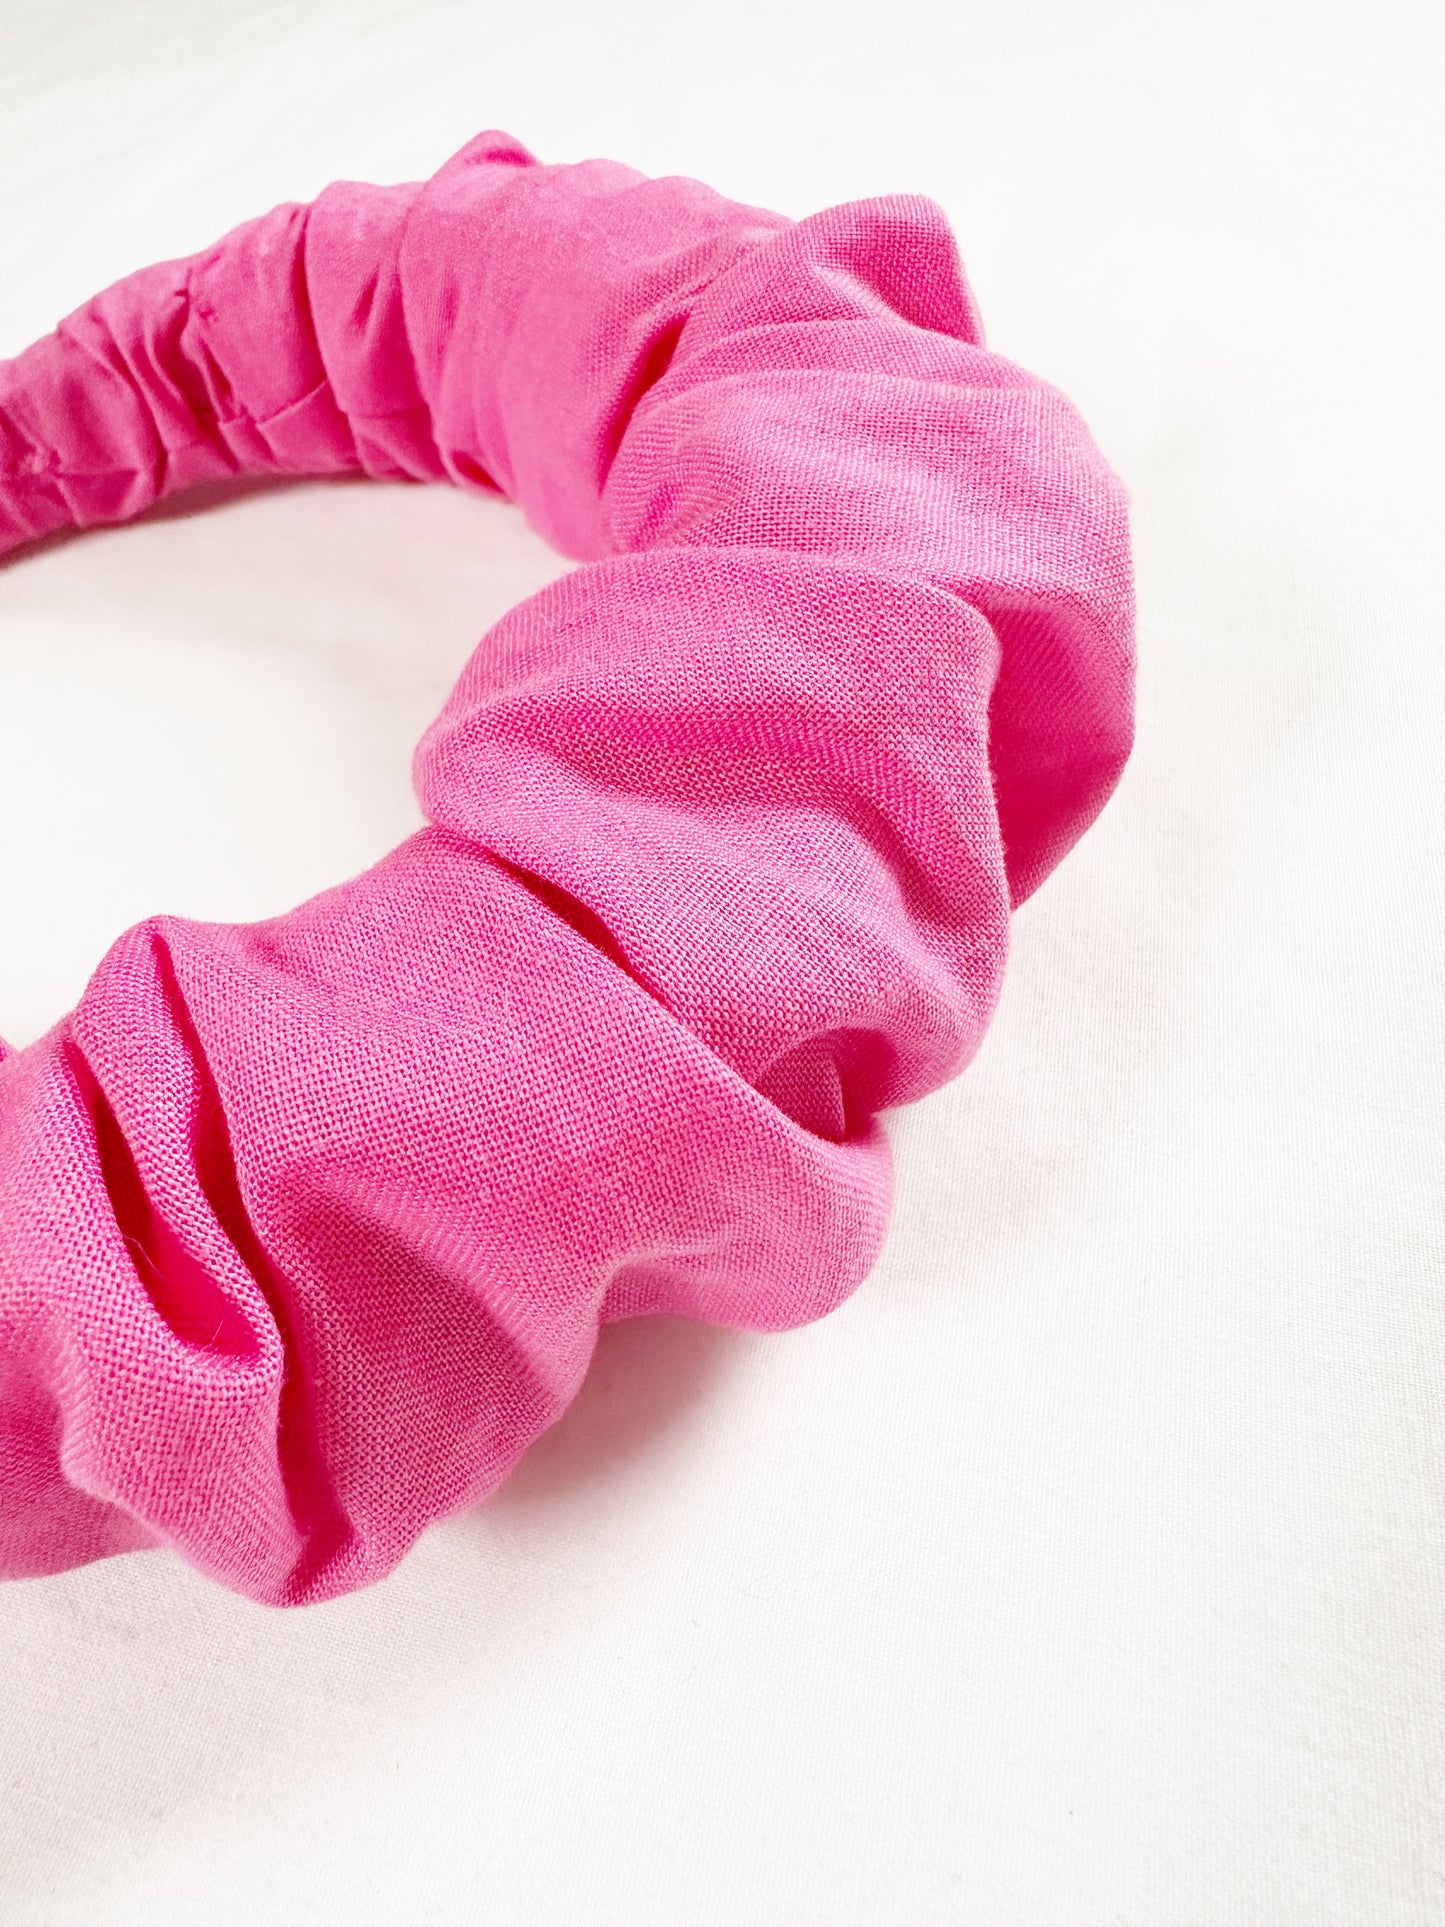 Ruffle Headband in pink cotton